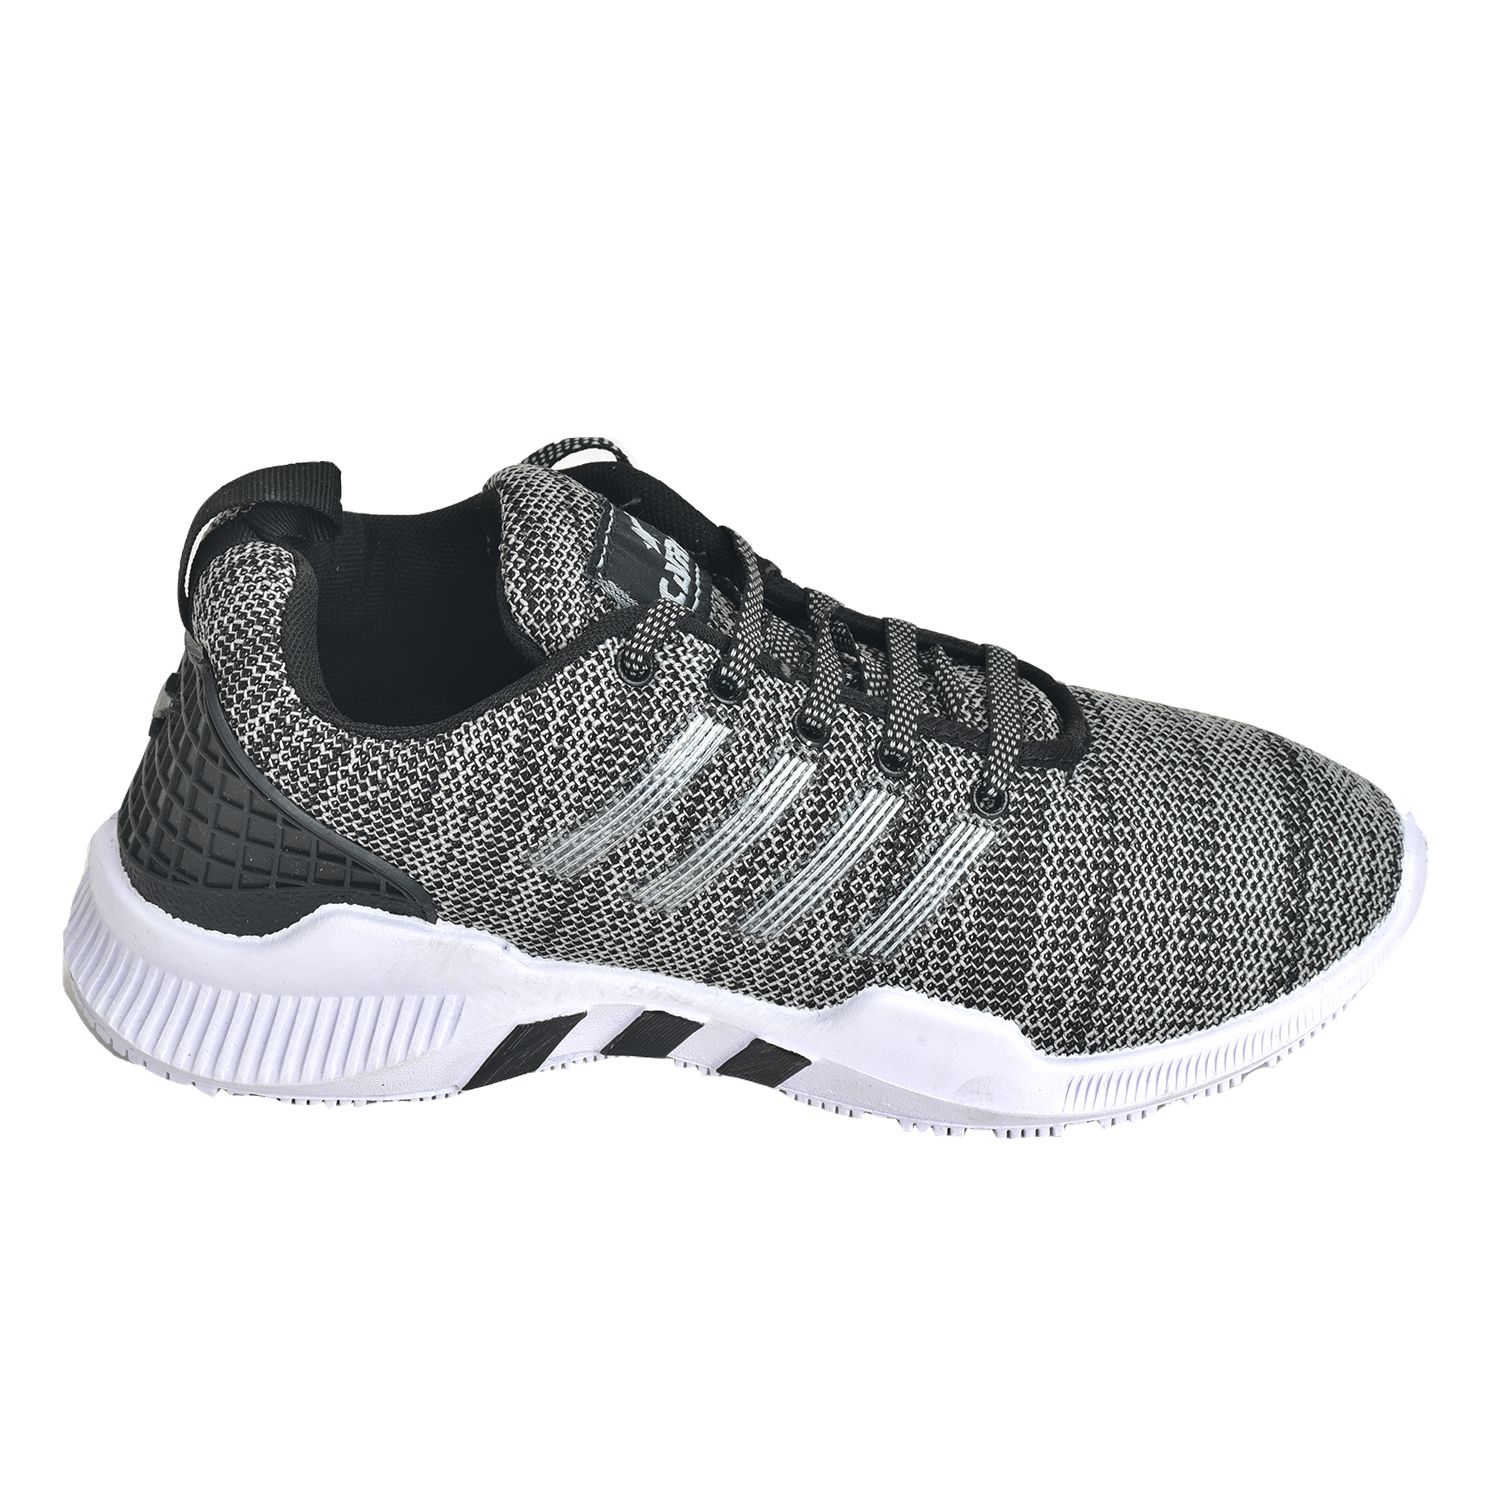 CAMRO LQT-01 Black Running Shoes - Buy 